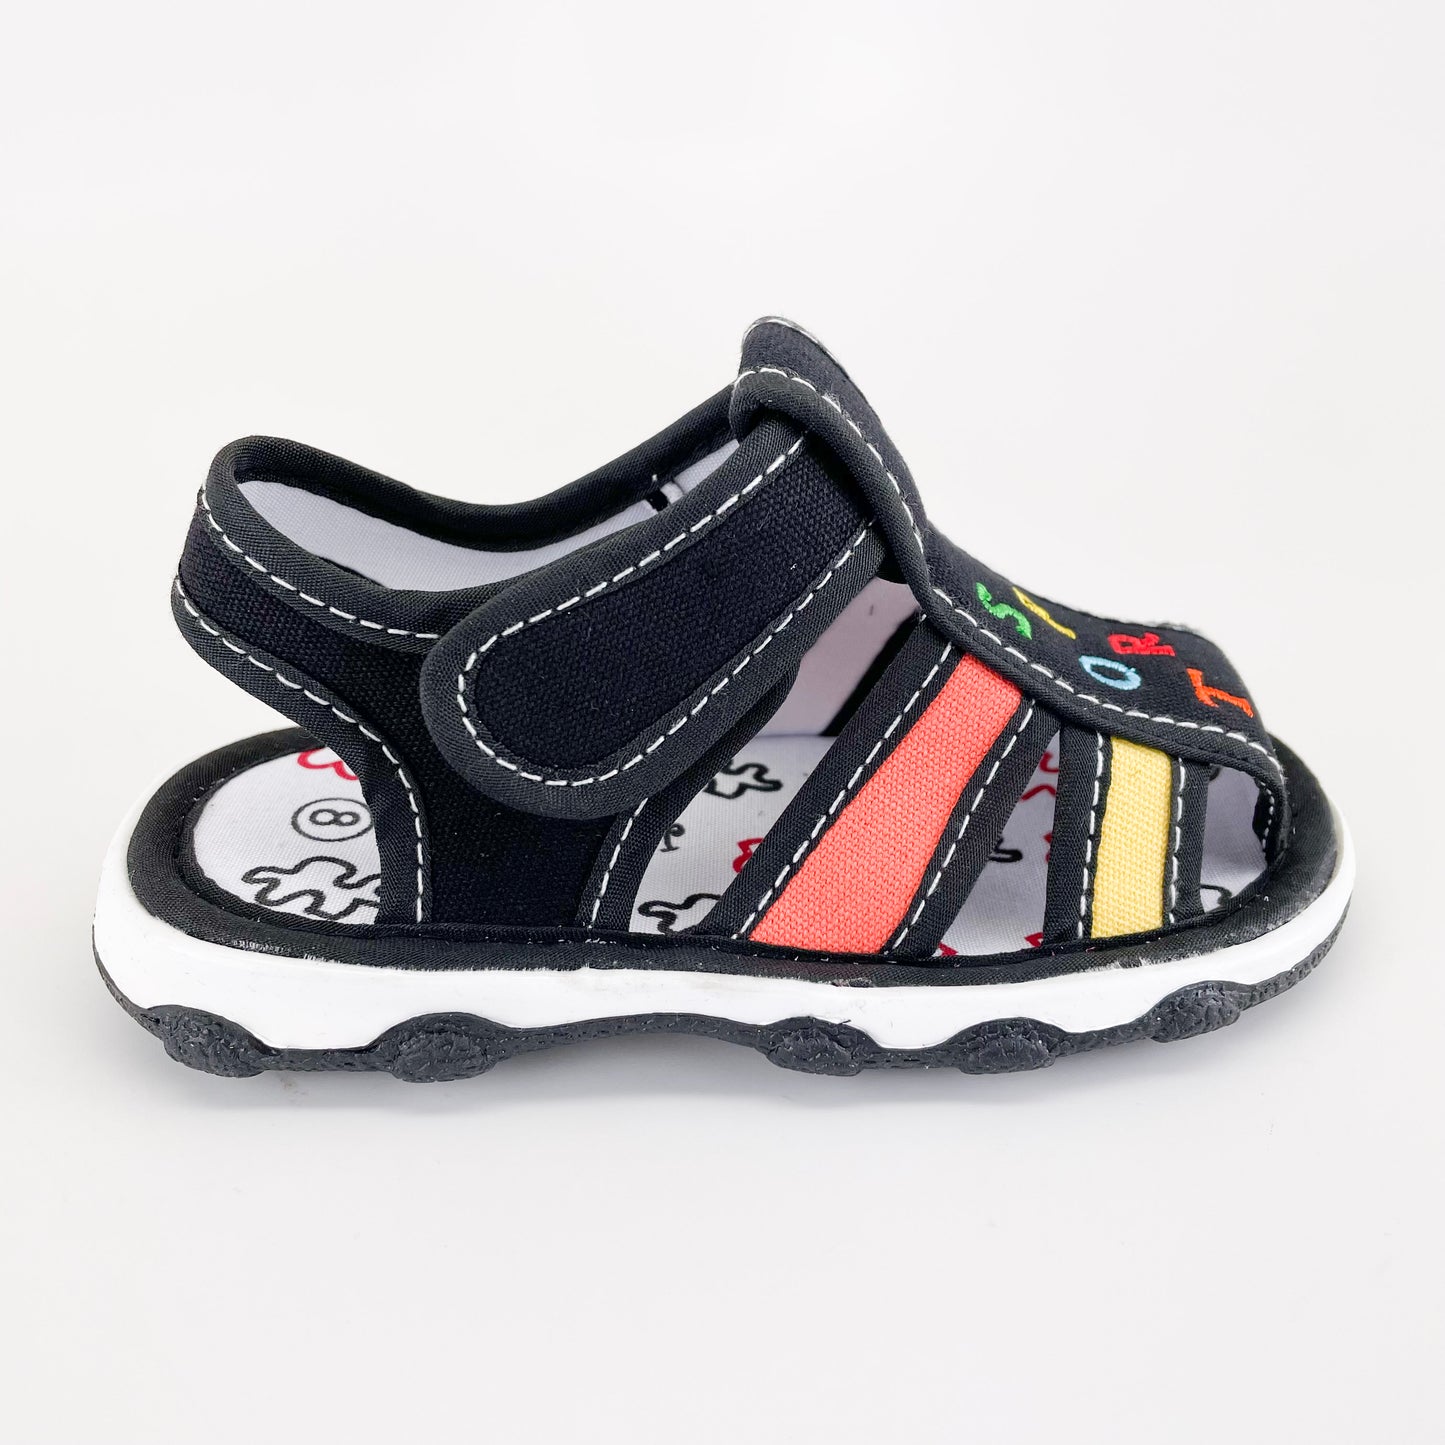 "Sport" Baby Squeaky Sandals